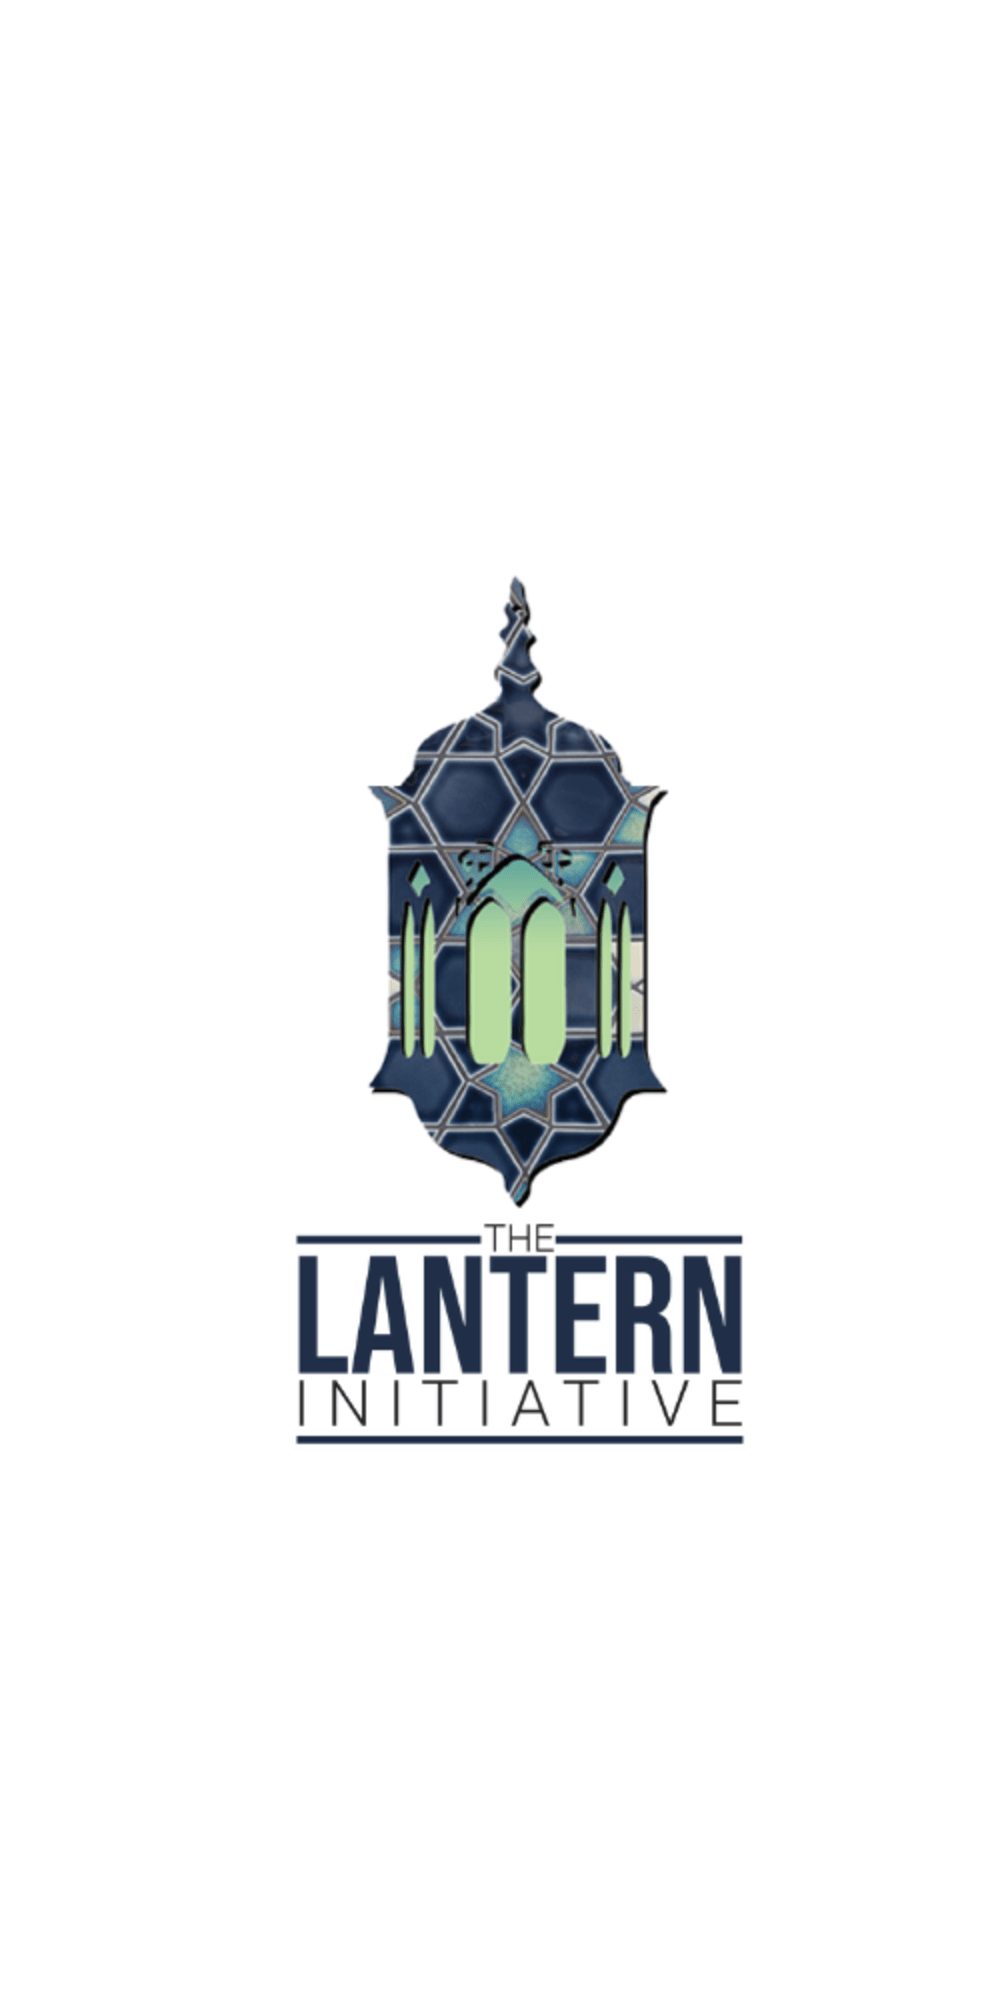 Lantern Initiative logo